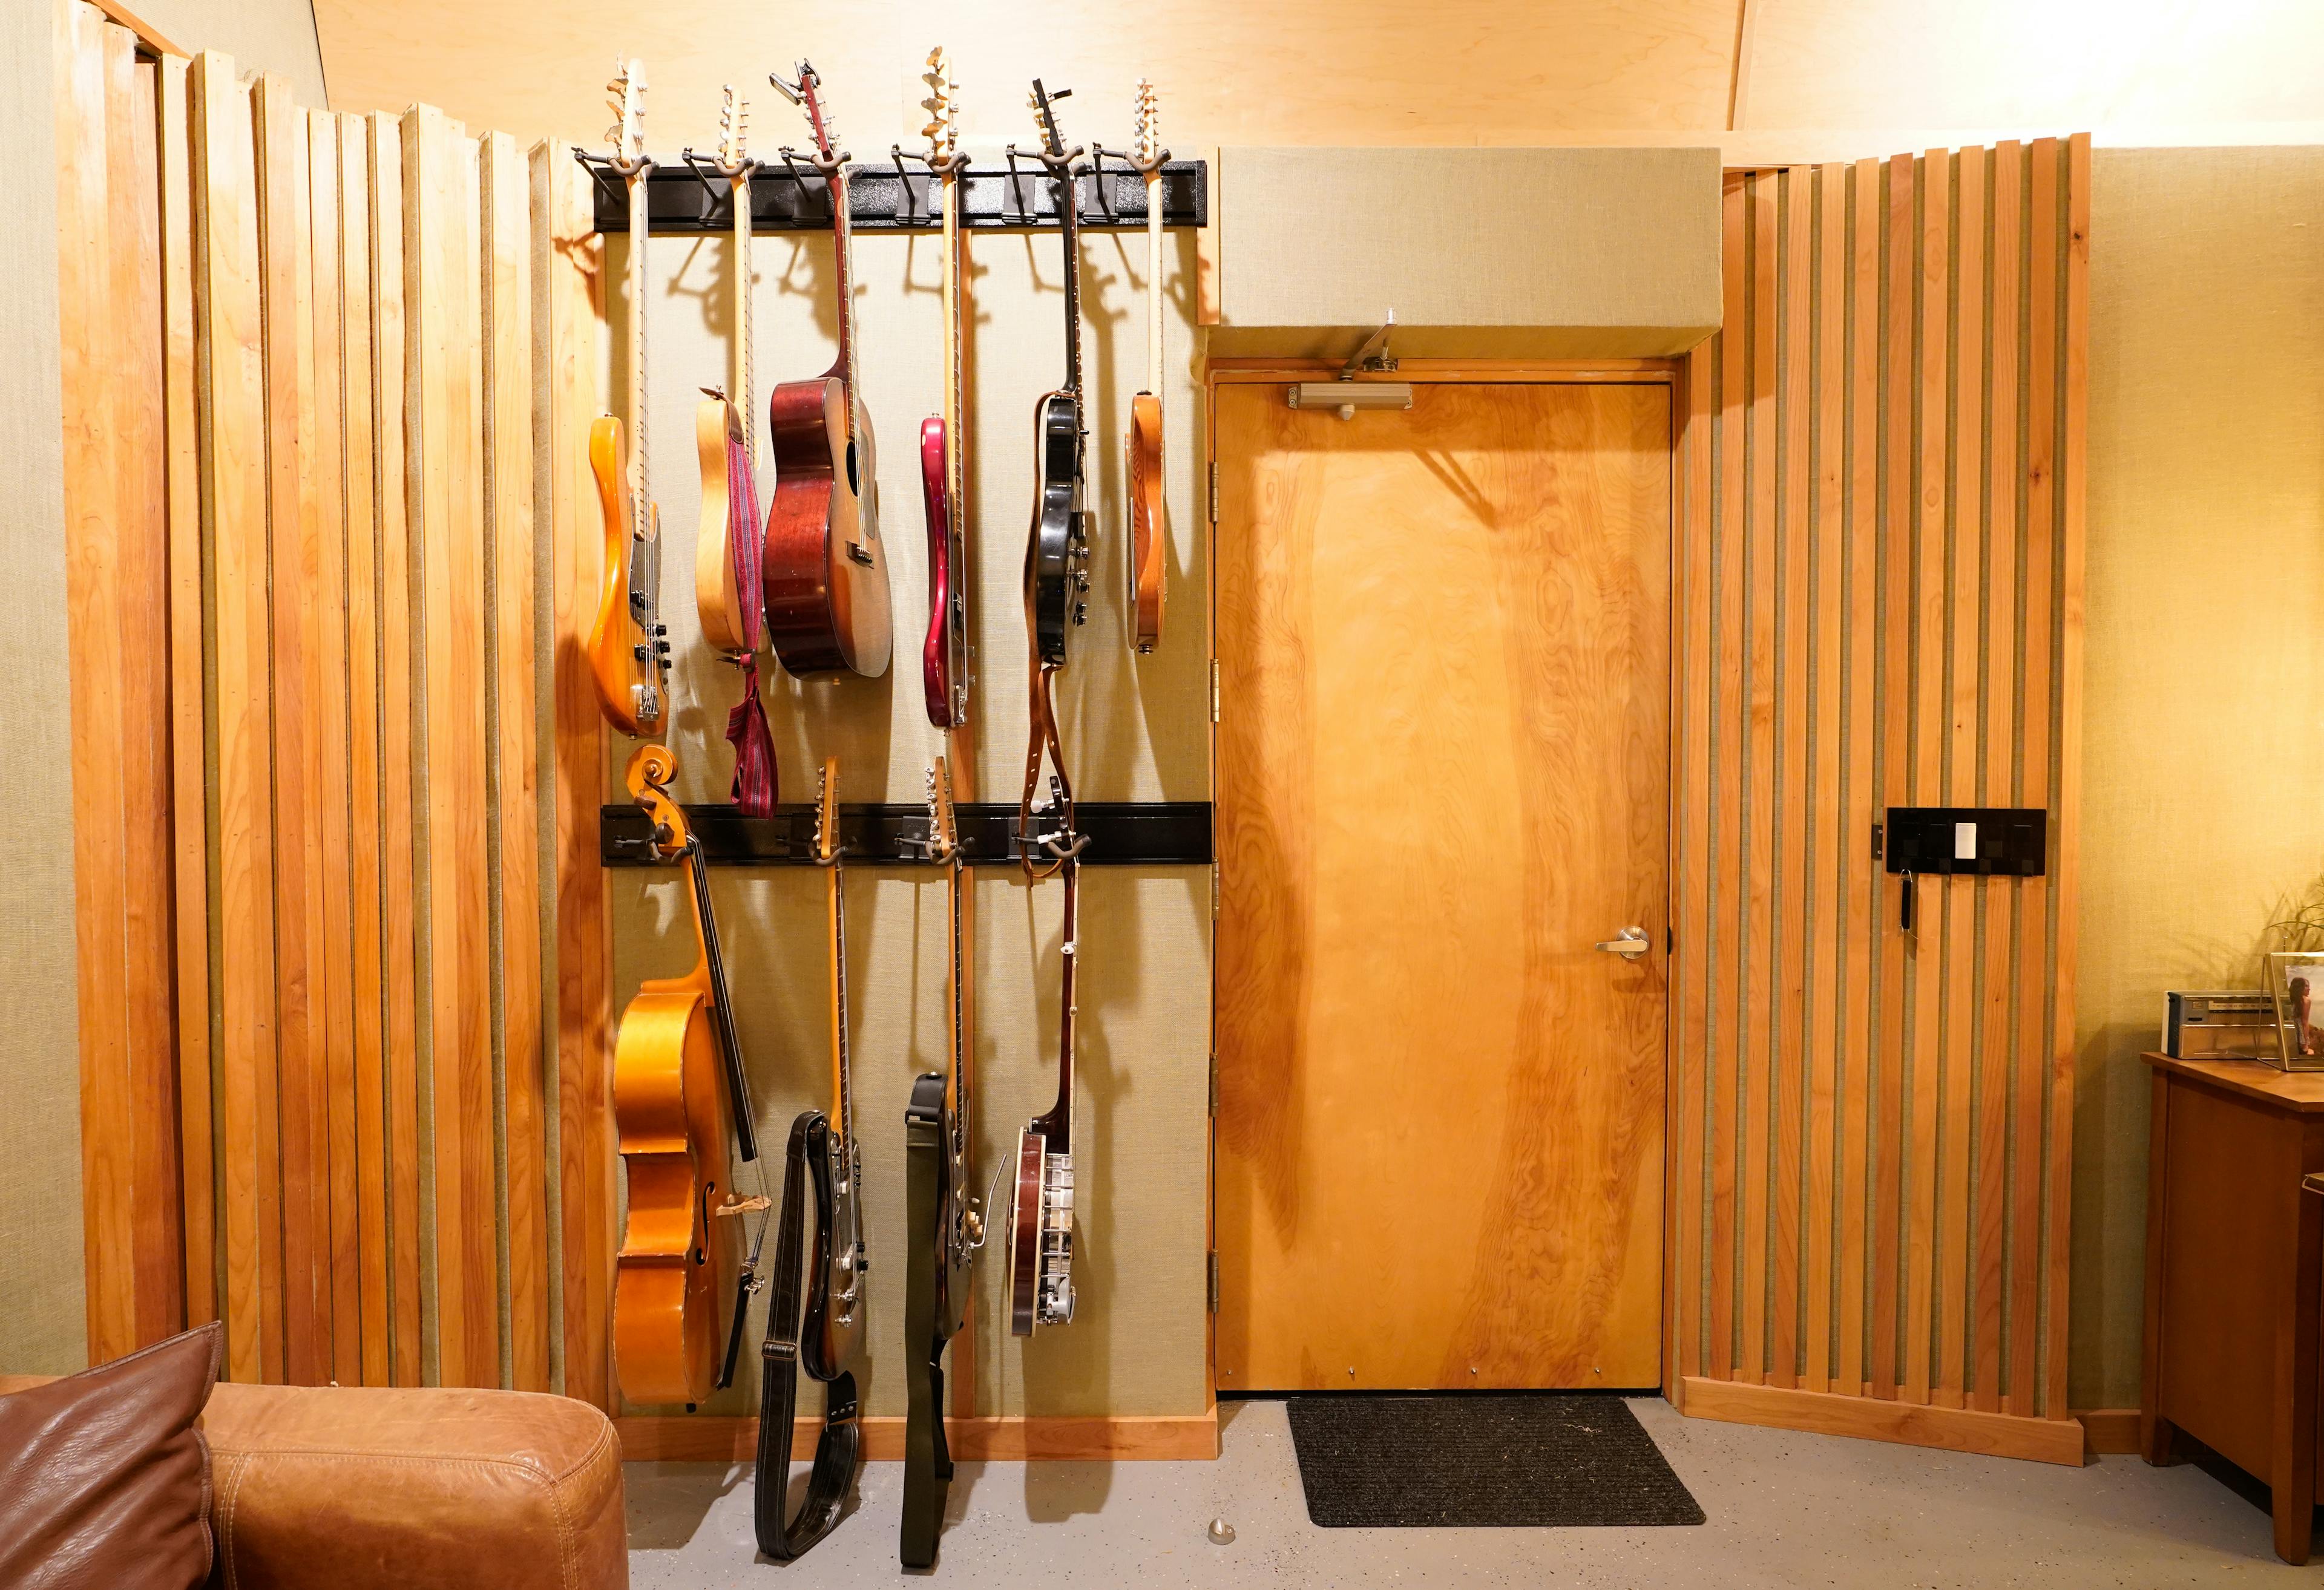 Guitars in Dryw's studio